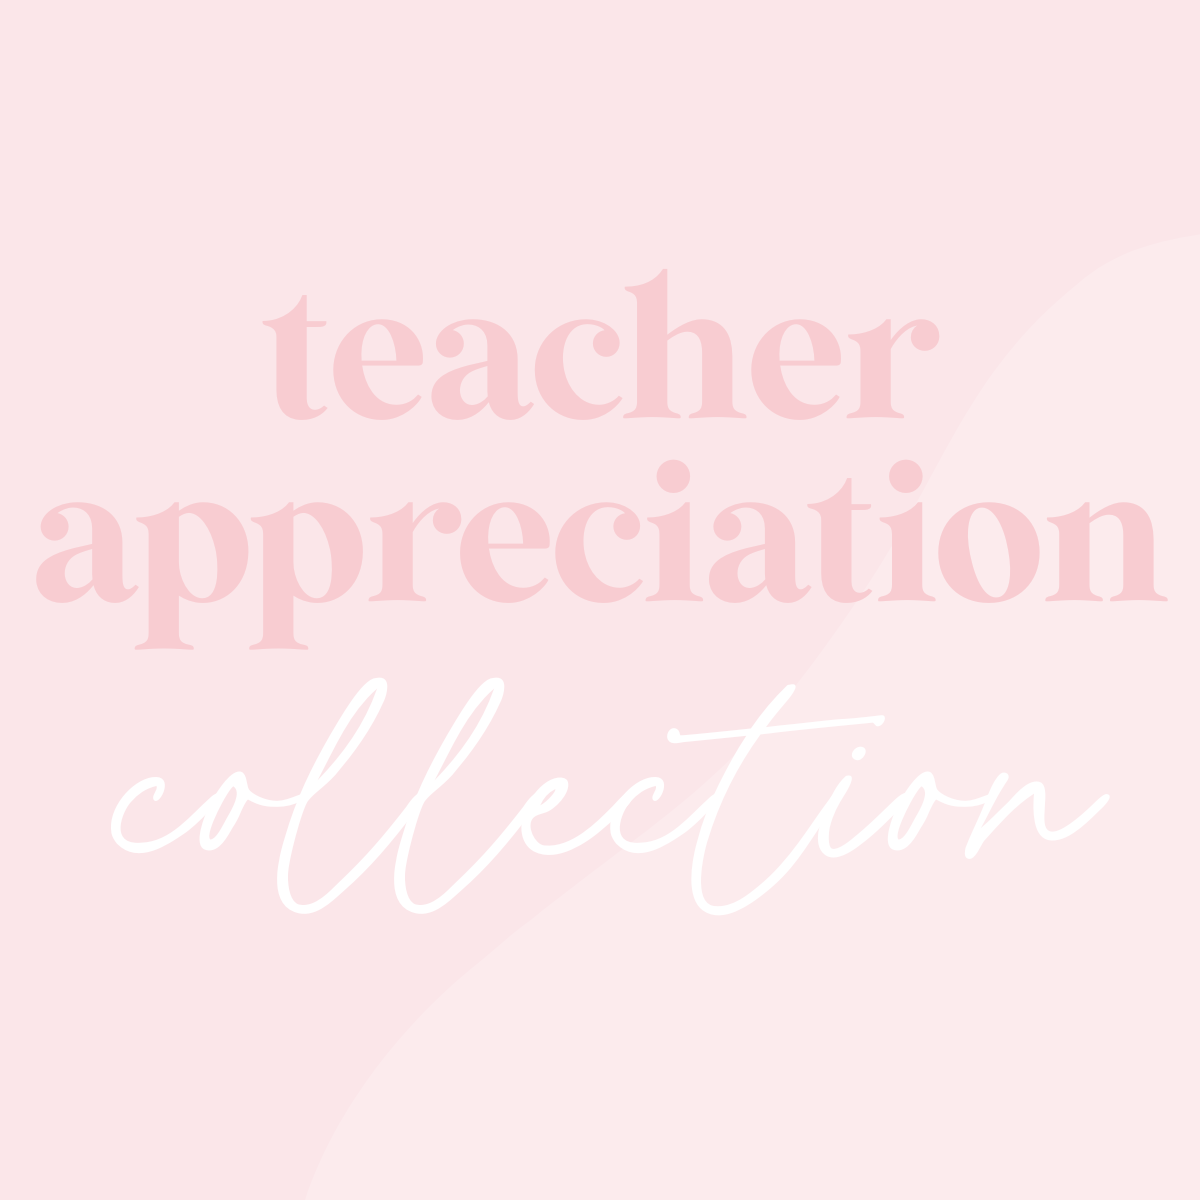 TEACHER APPRECIATION